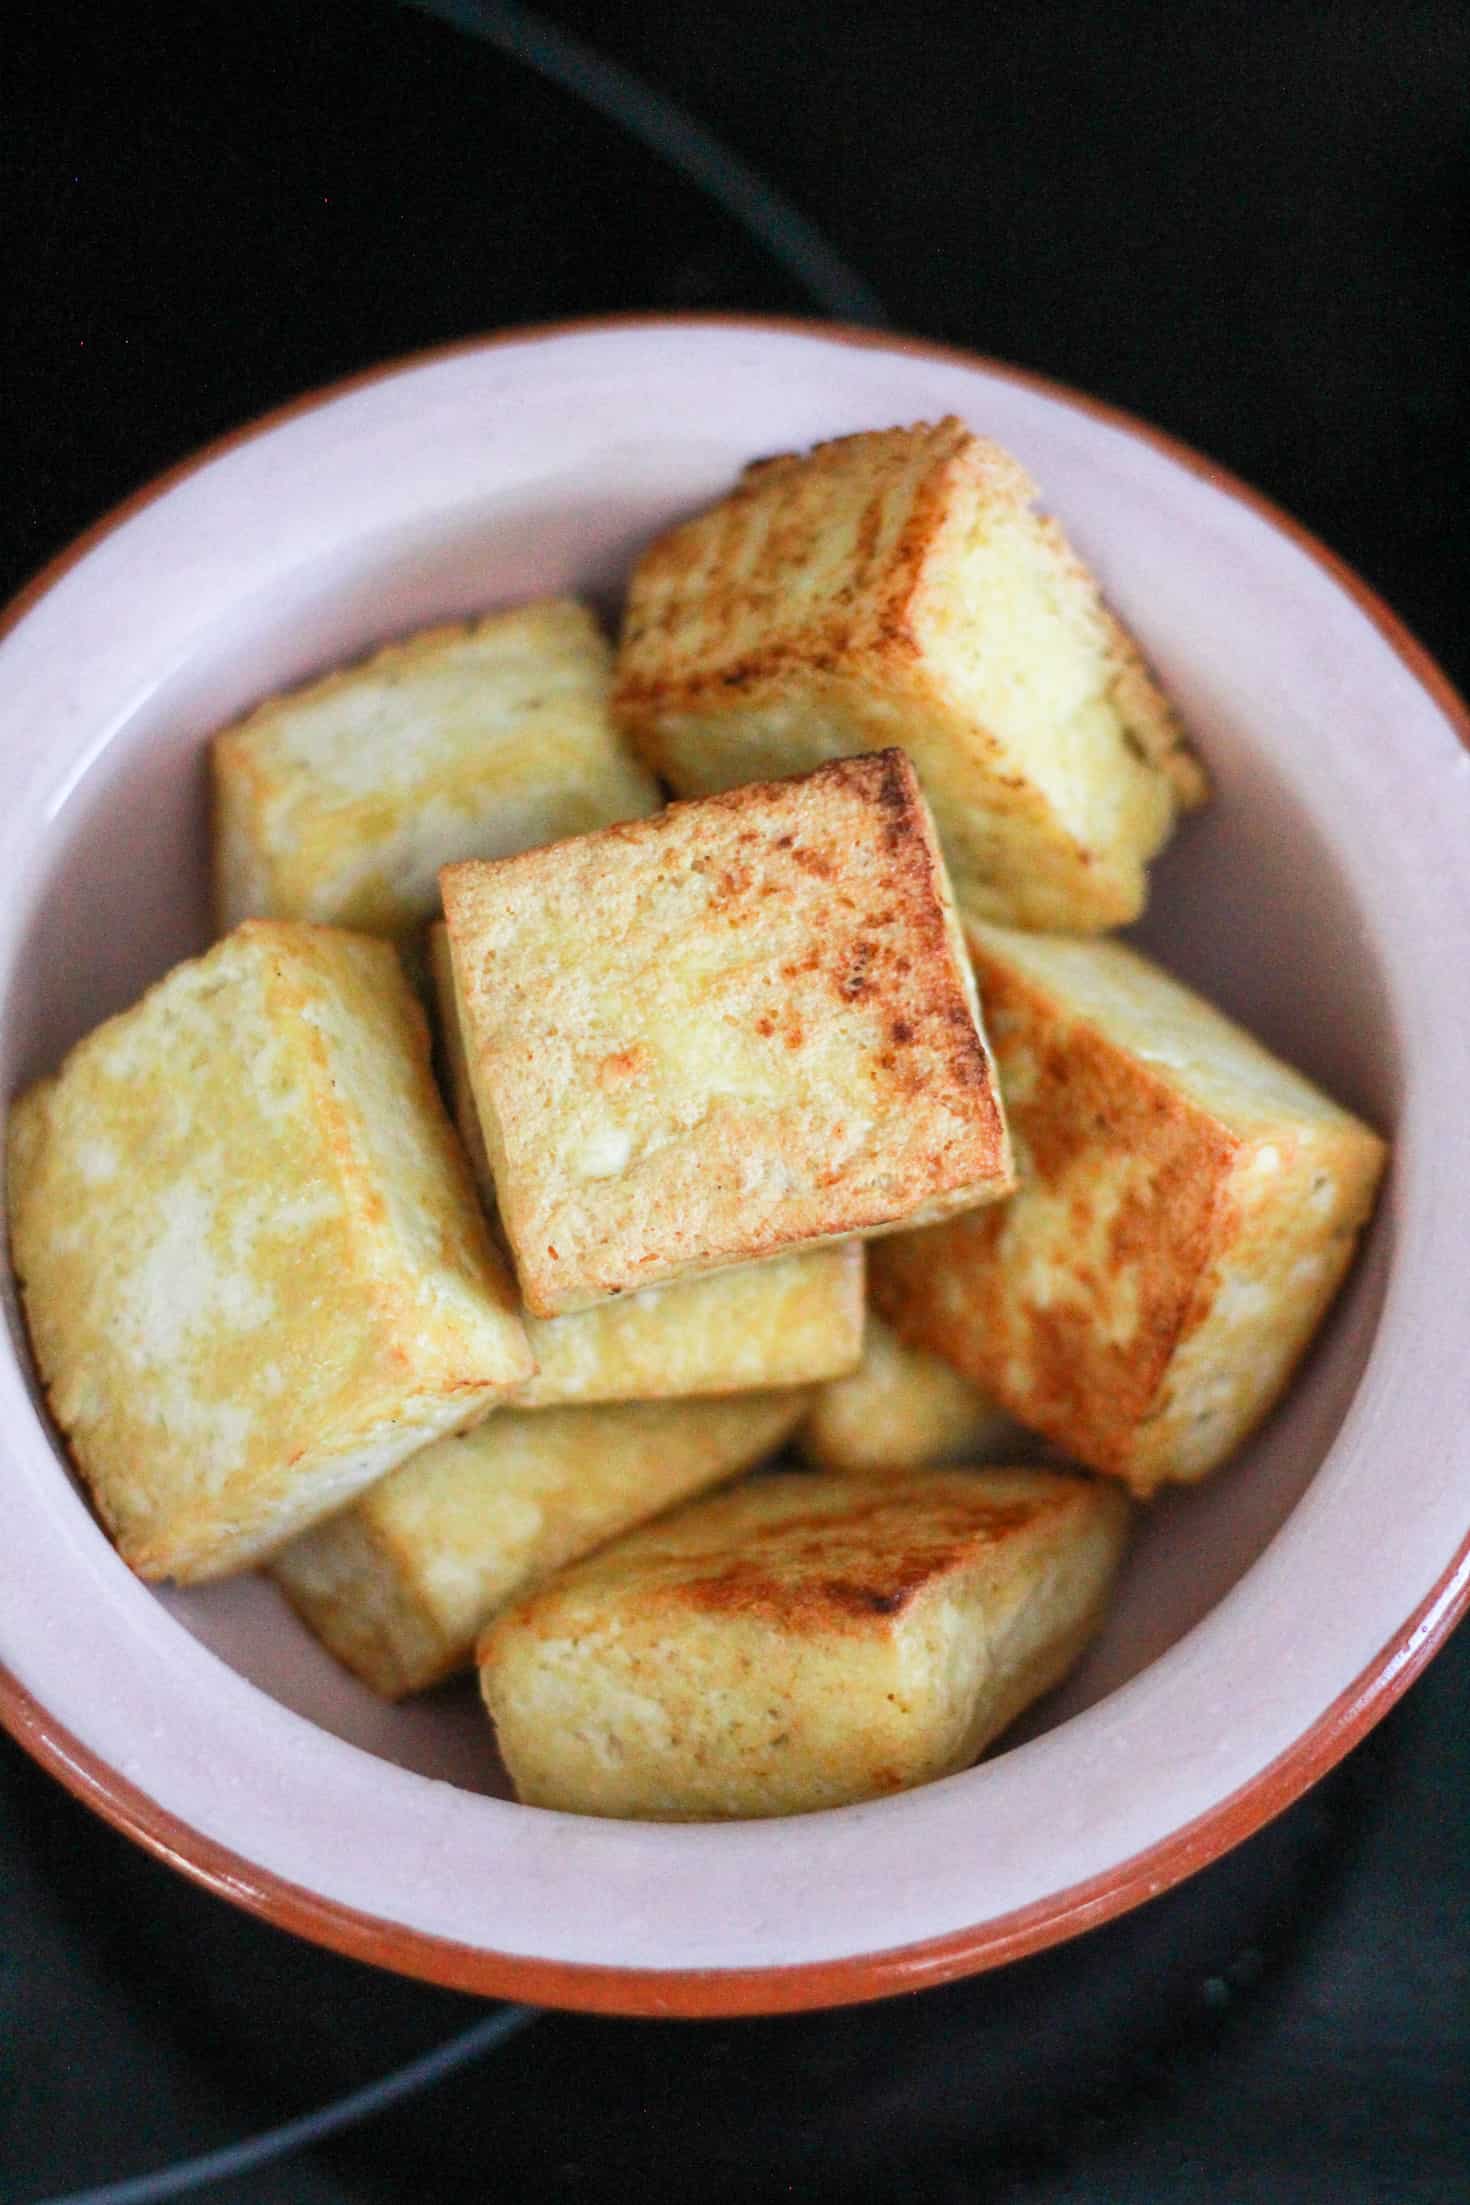 Pan-fried tofu in a pink bowl.